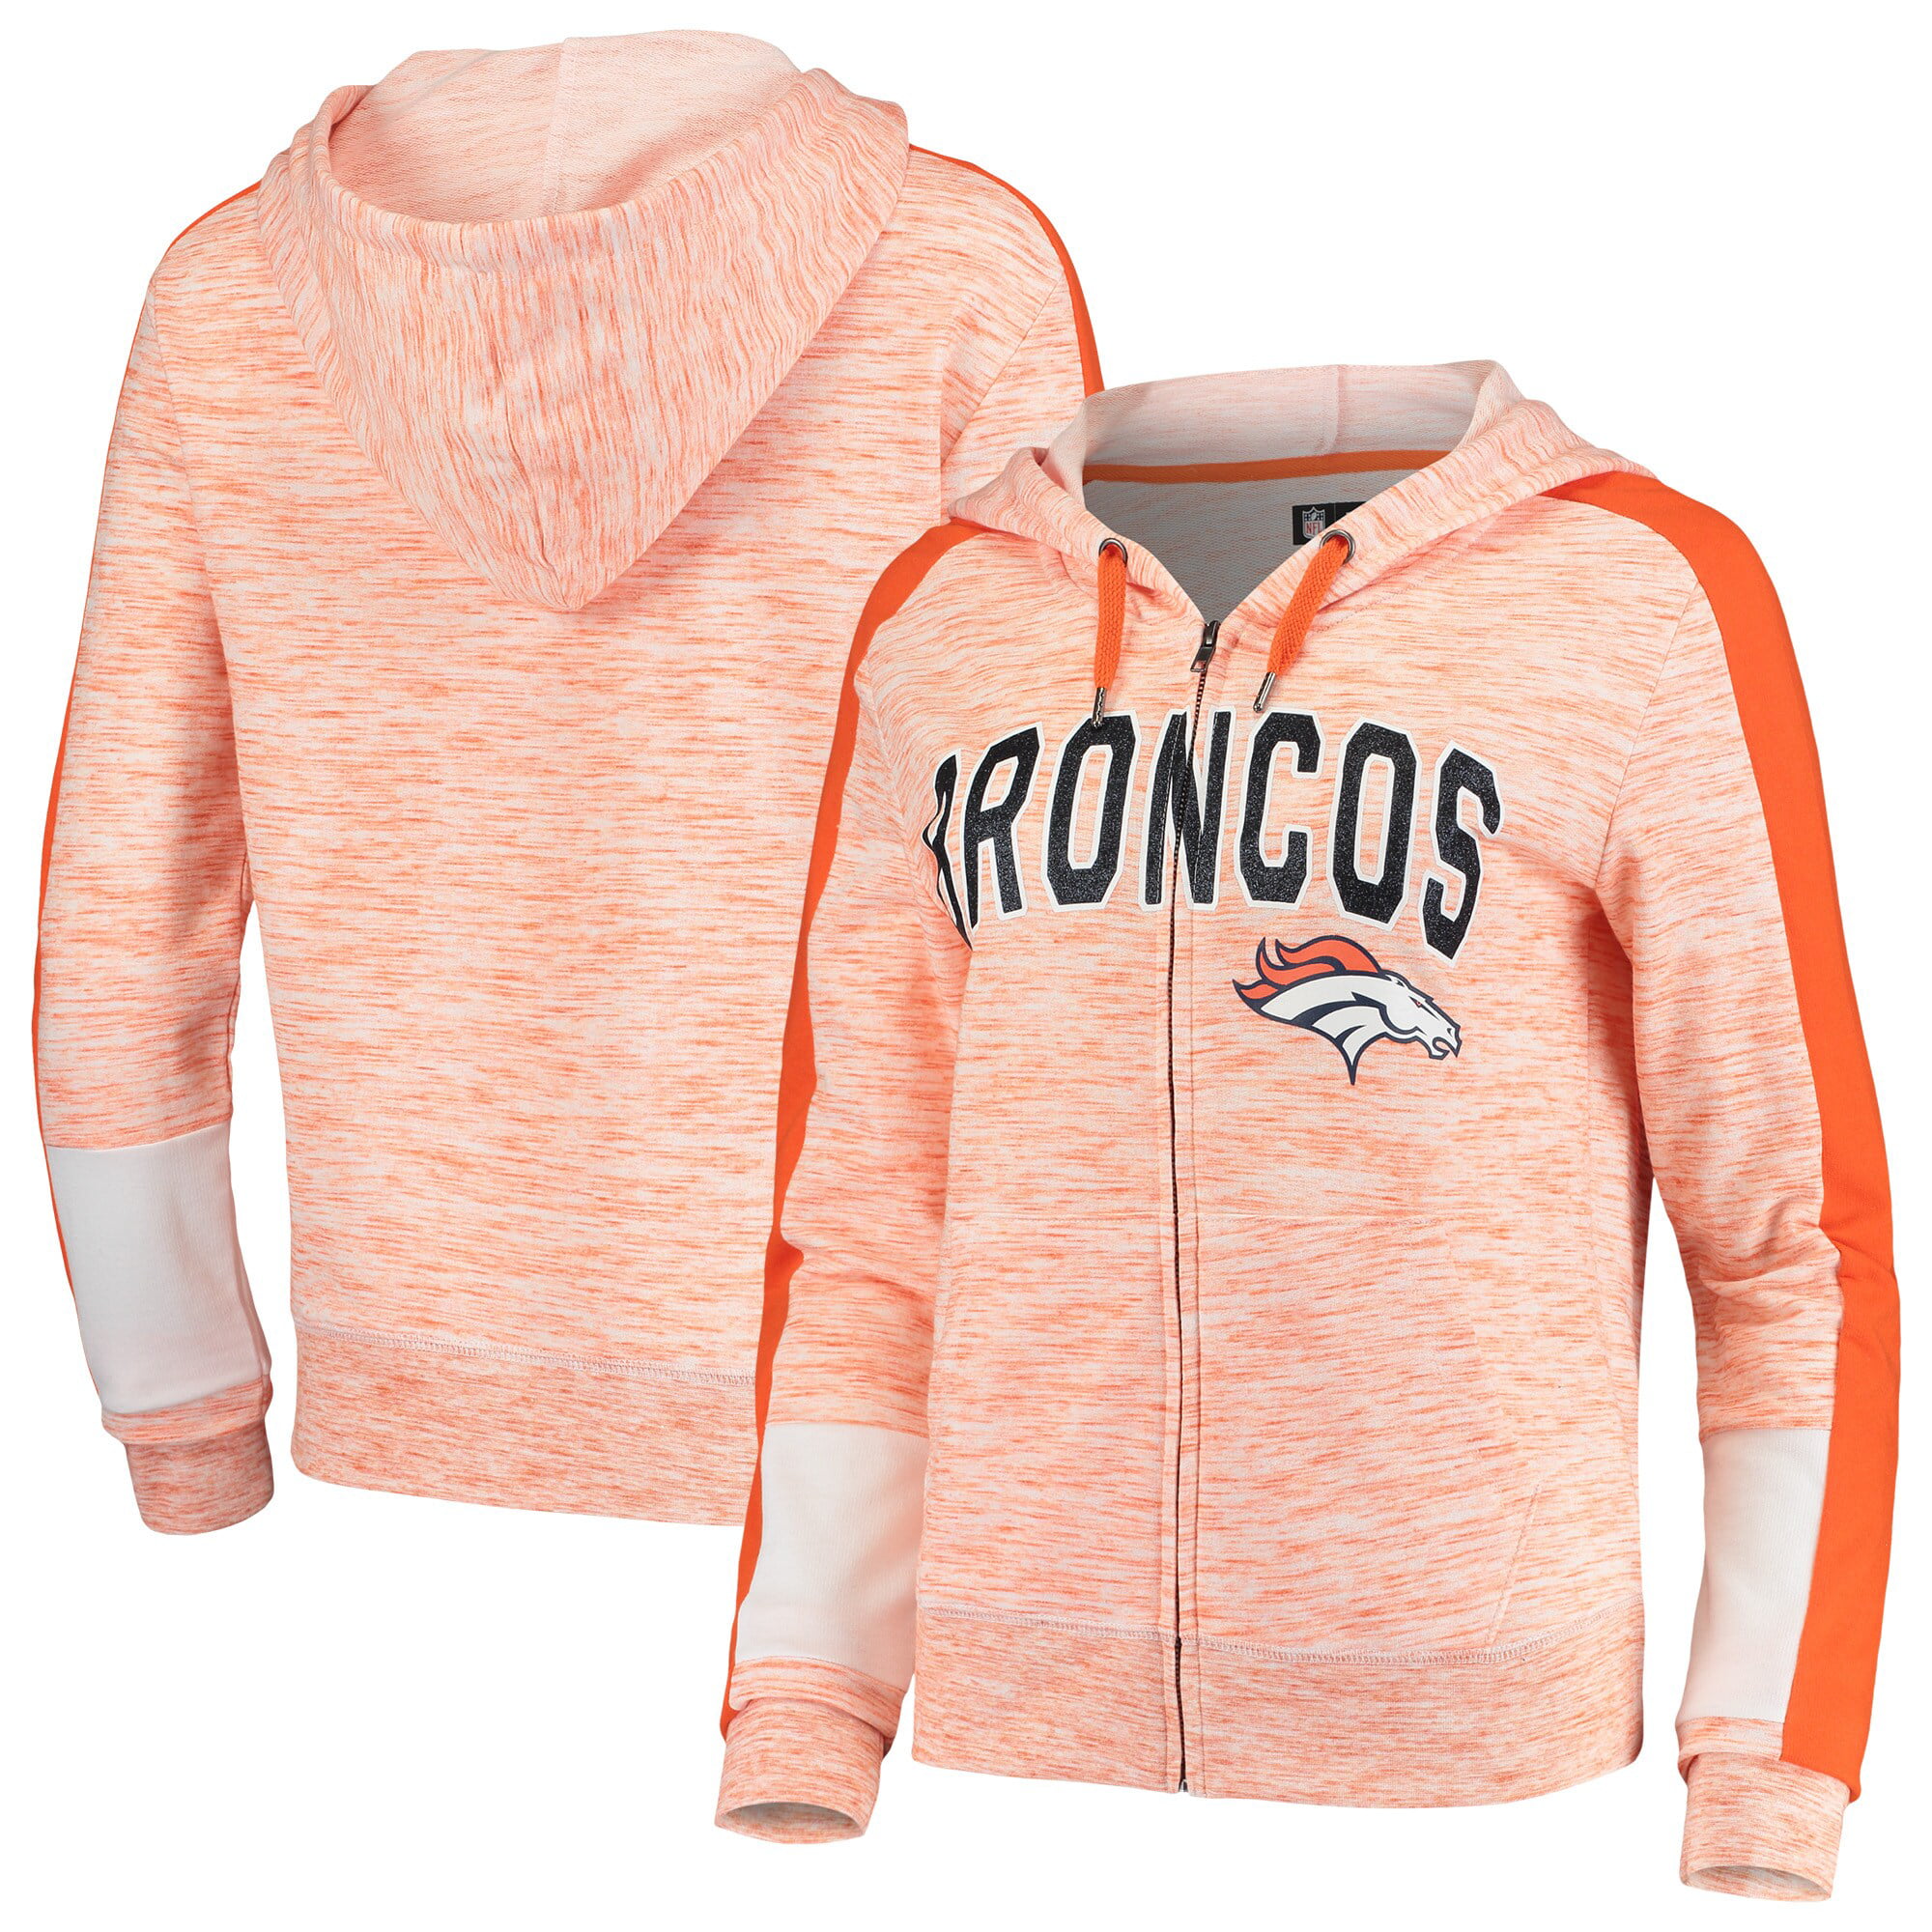 Women's New Era Orange Denver Broncos 